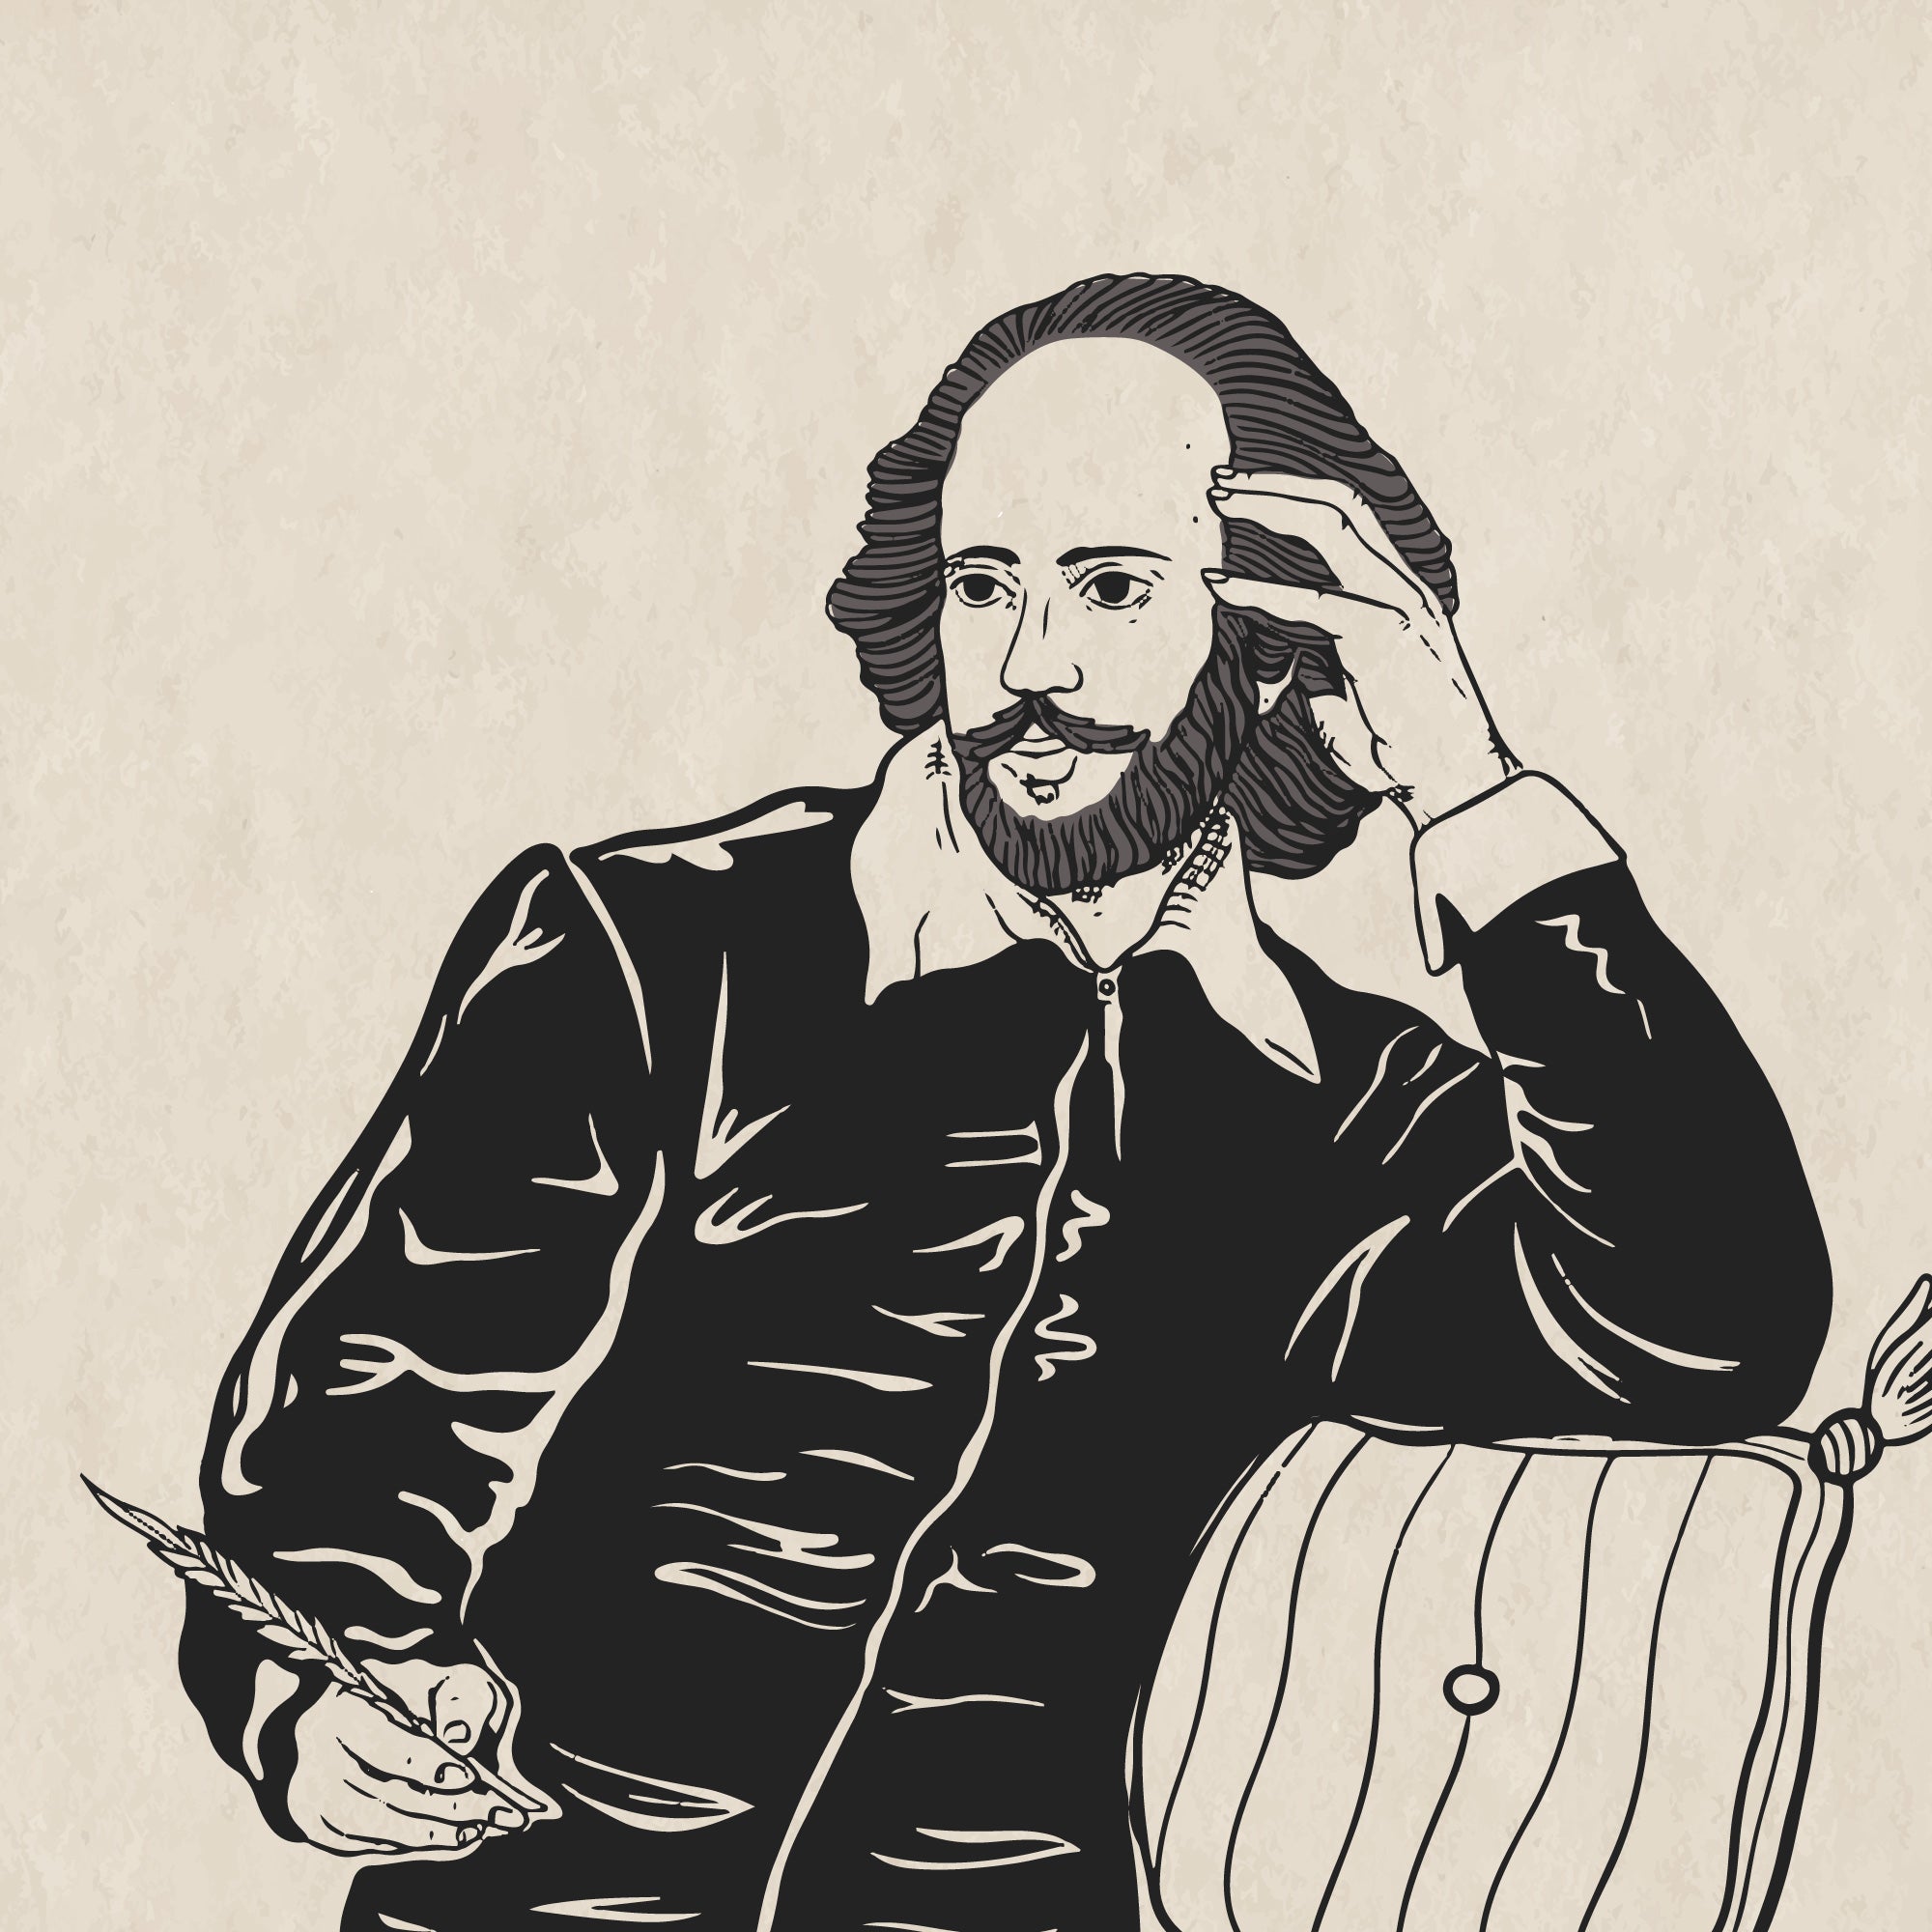 The Artistic Life Of William Shakespeare